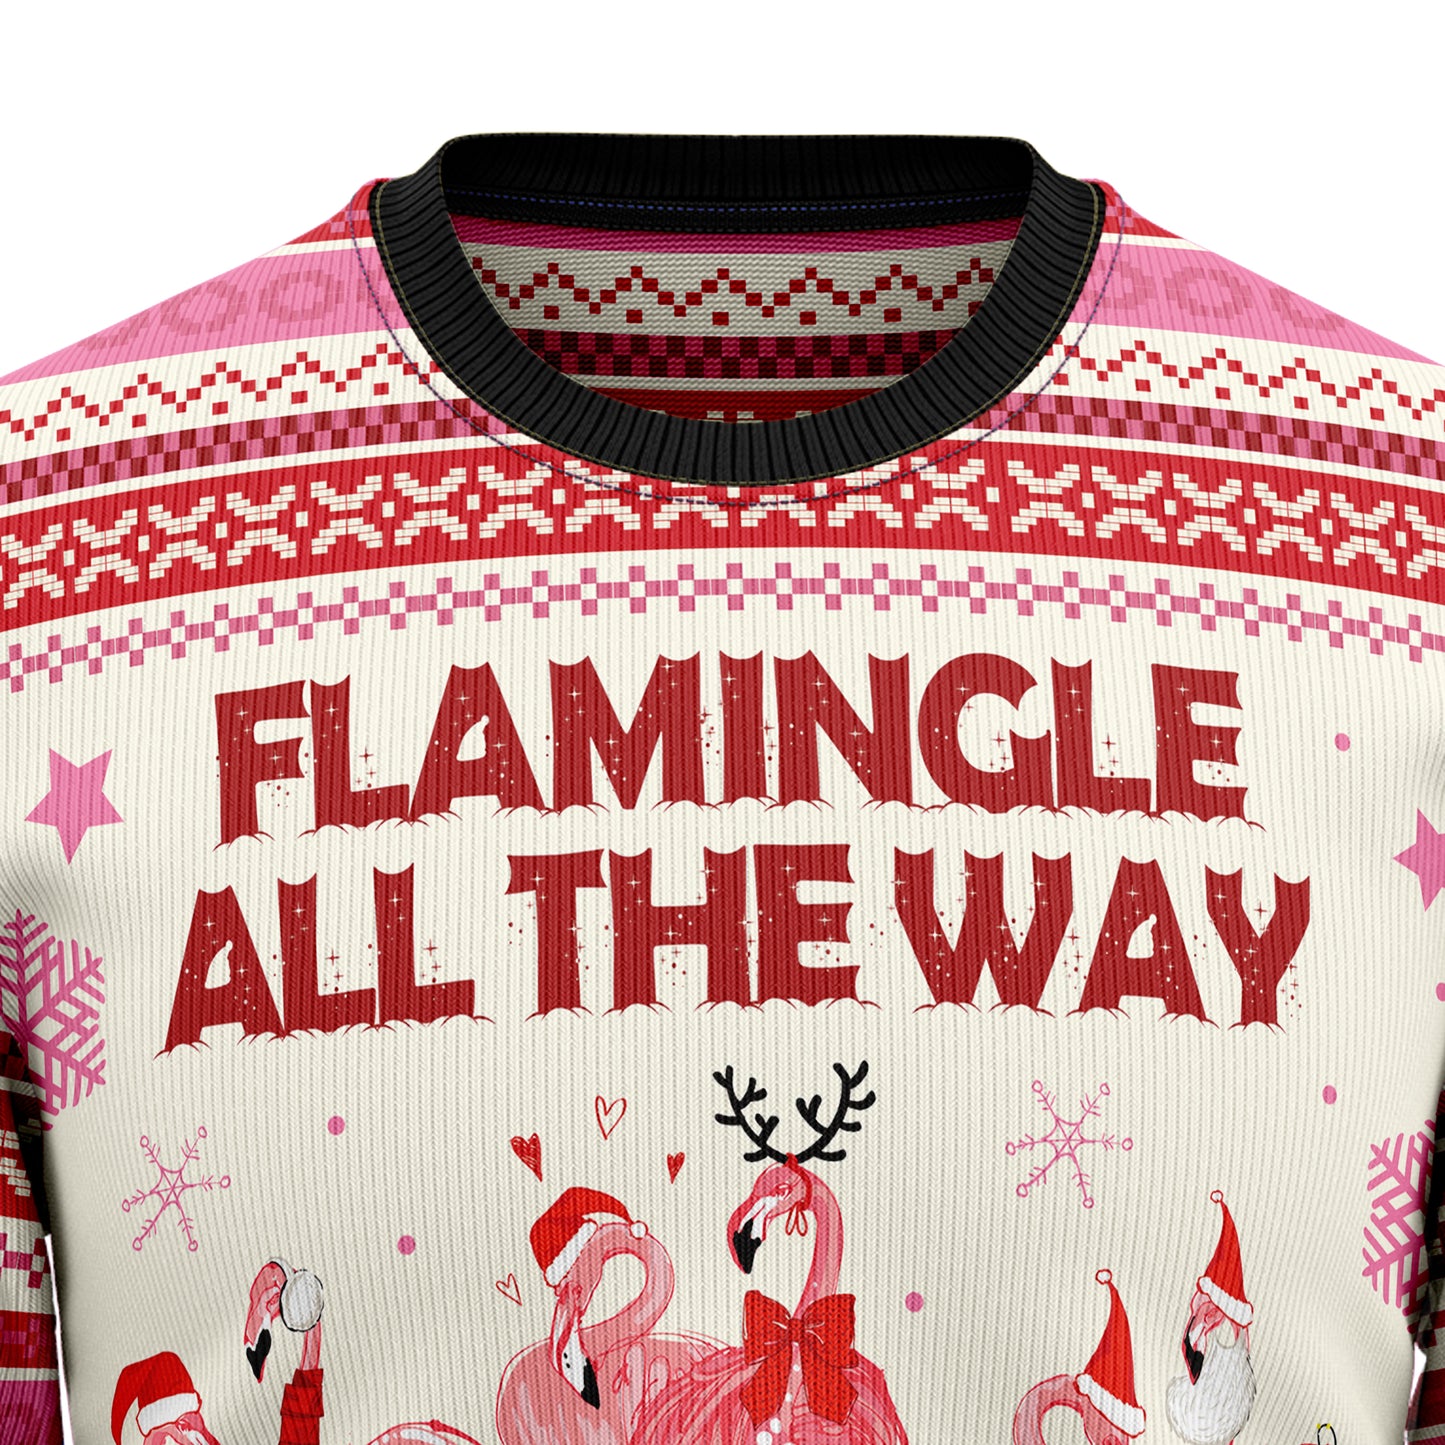 Flamingo Flamingle All The Ways HZ112312 Ugly Christmas Sweater